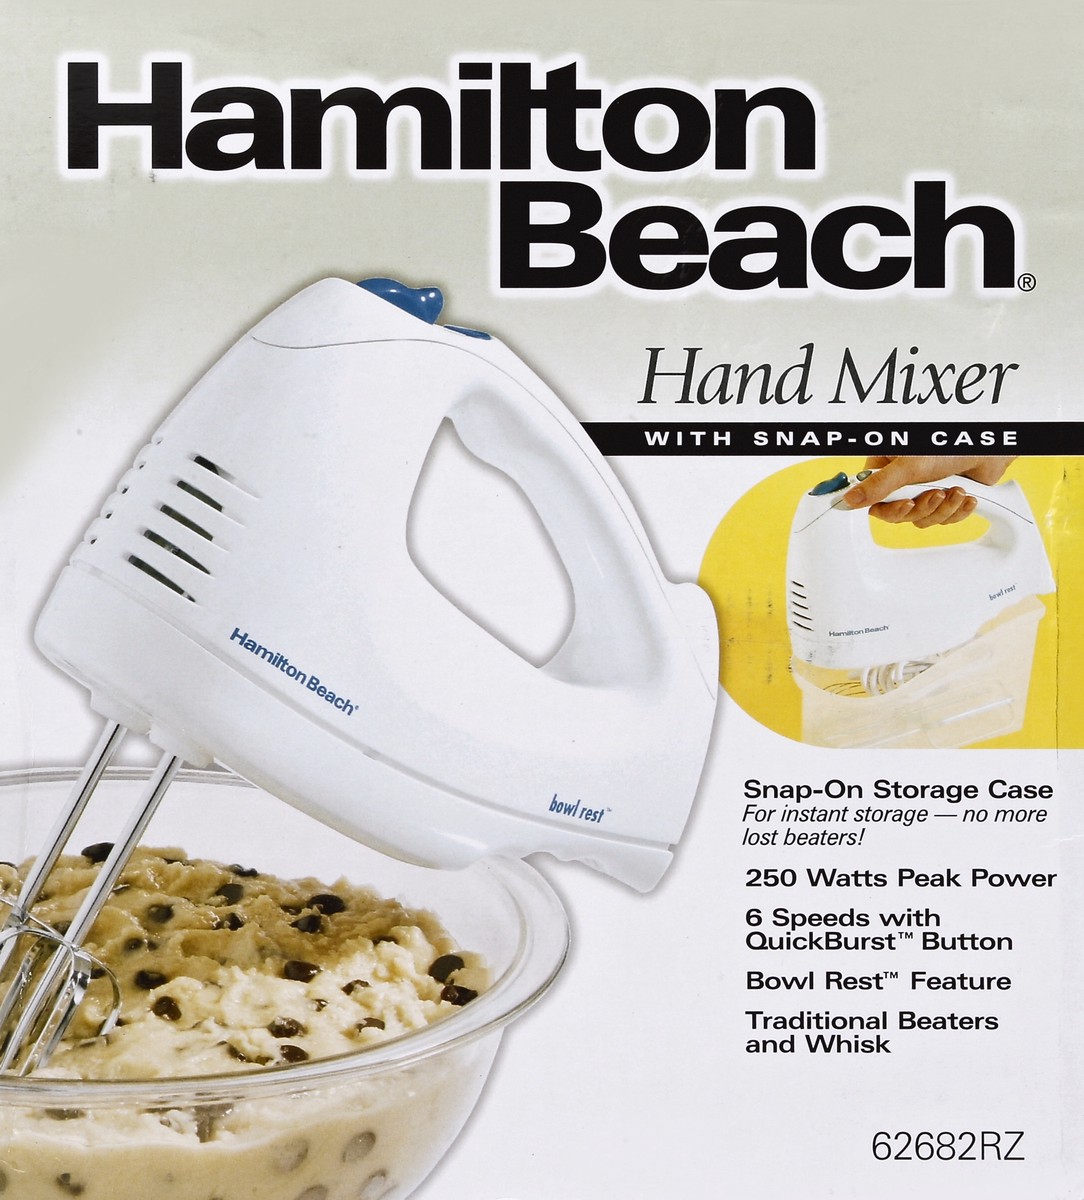 Hamilton Beach Hand Mixer with Snap-On Case